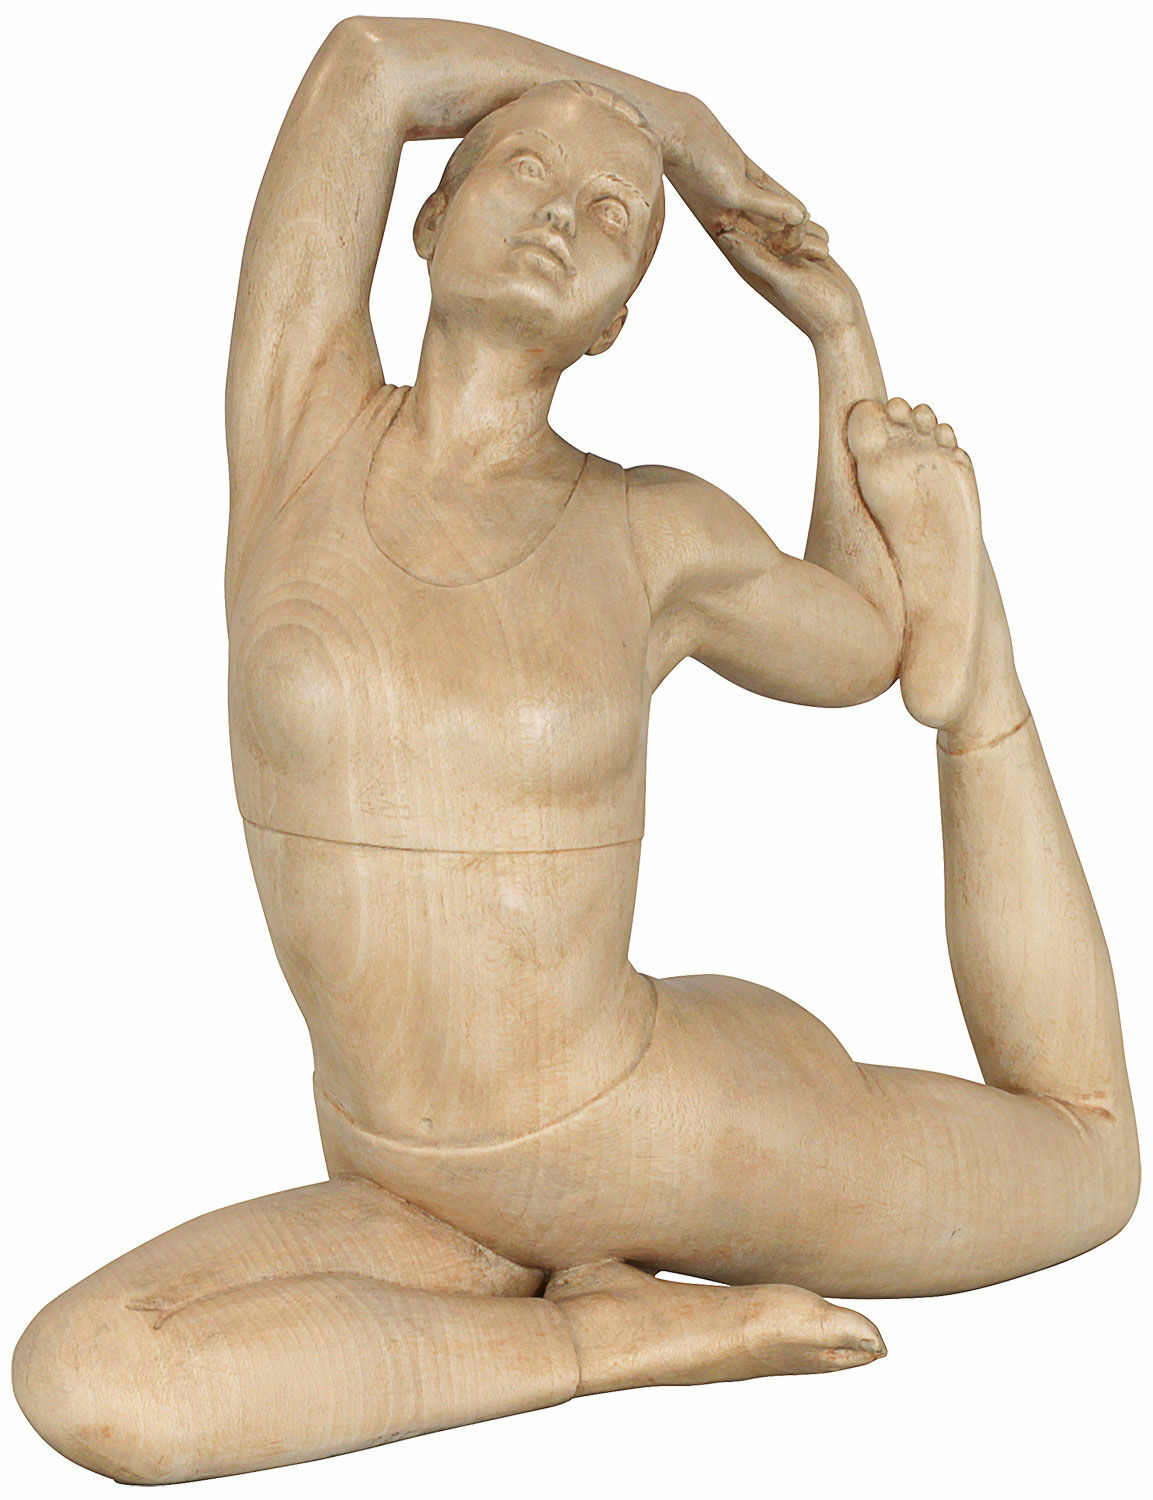 Wooden sculpture "Mindfulness" (2021) (Original / Unique piece) by Richard Senoner